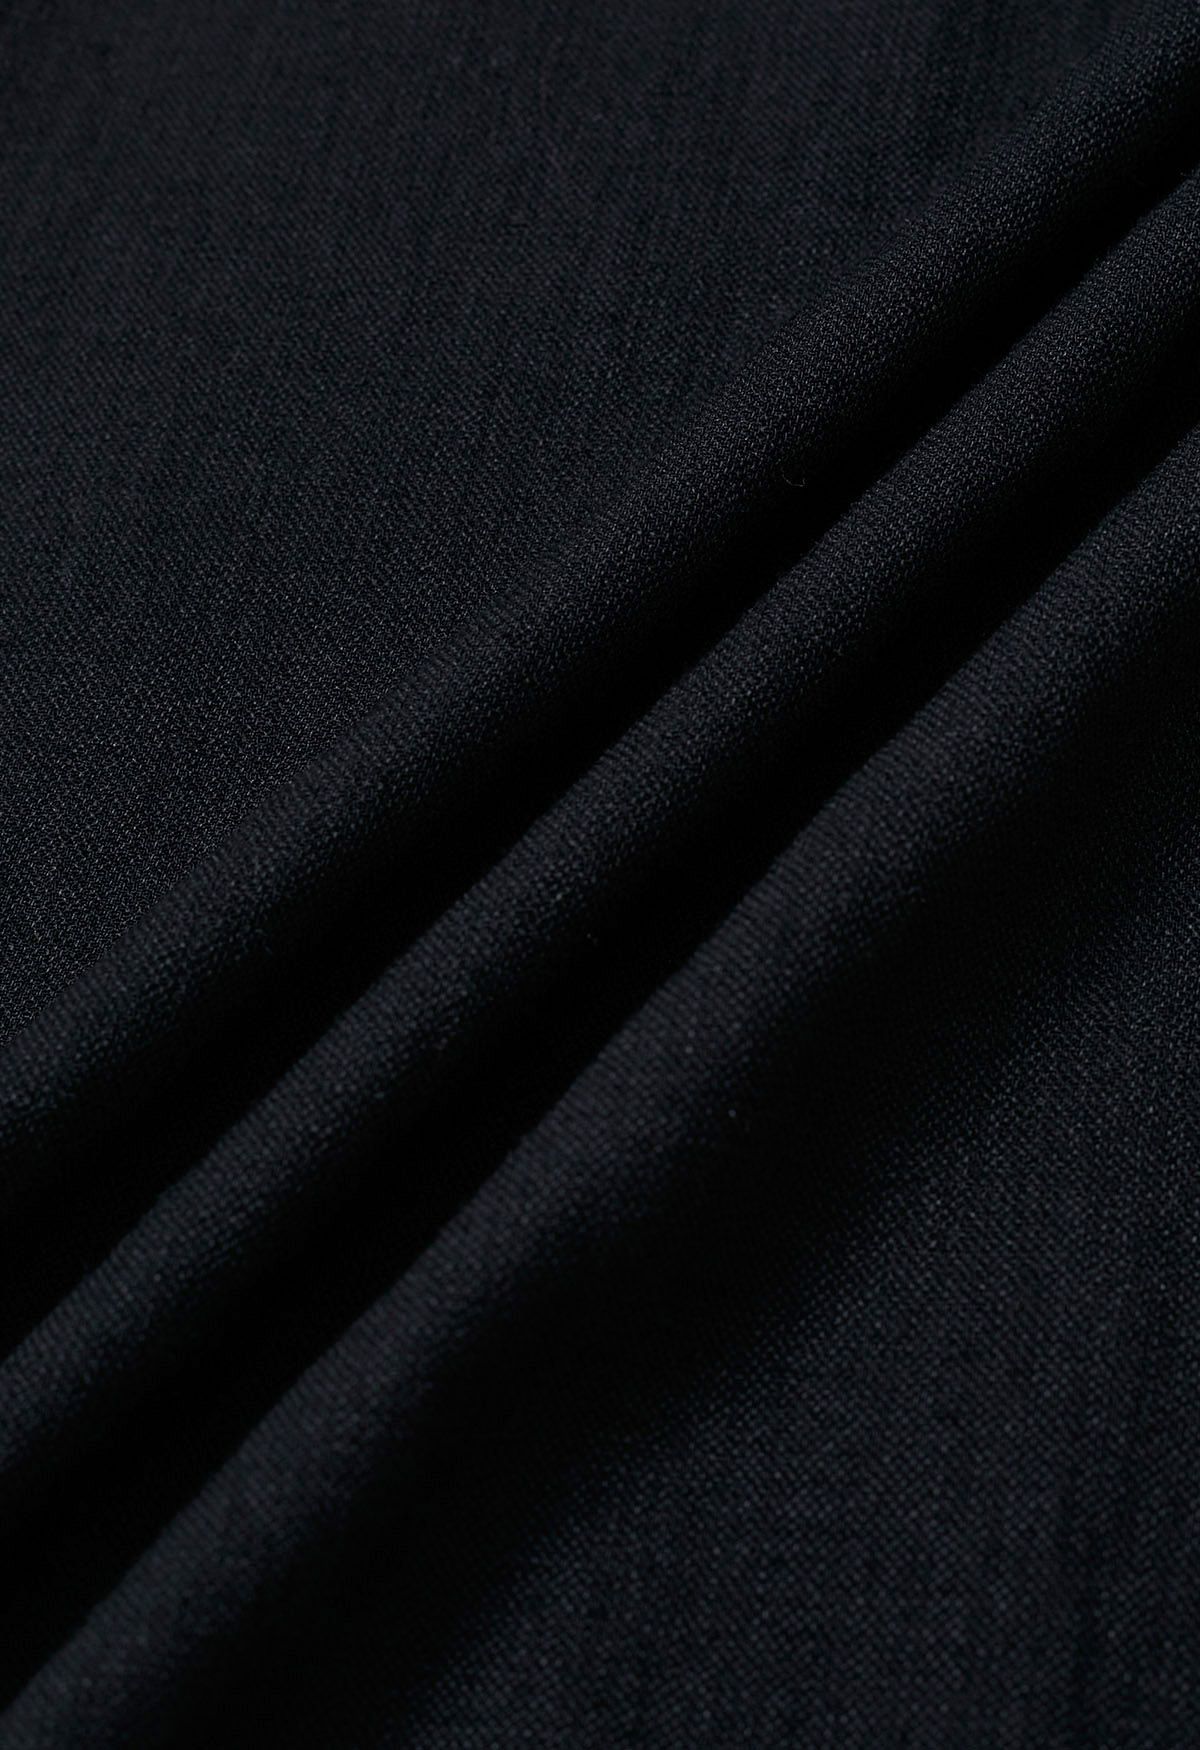 Casual Season Pleated Linen-Blend Pants in Black